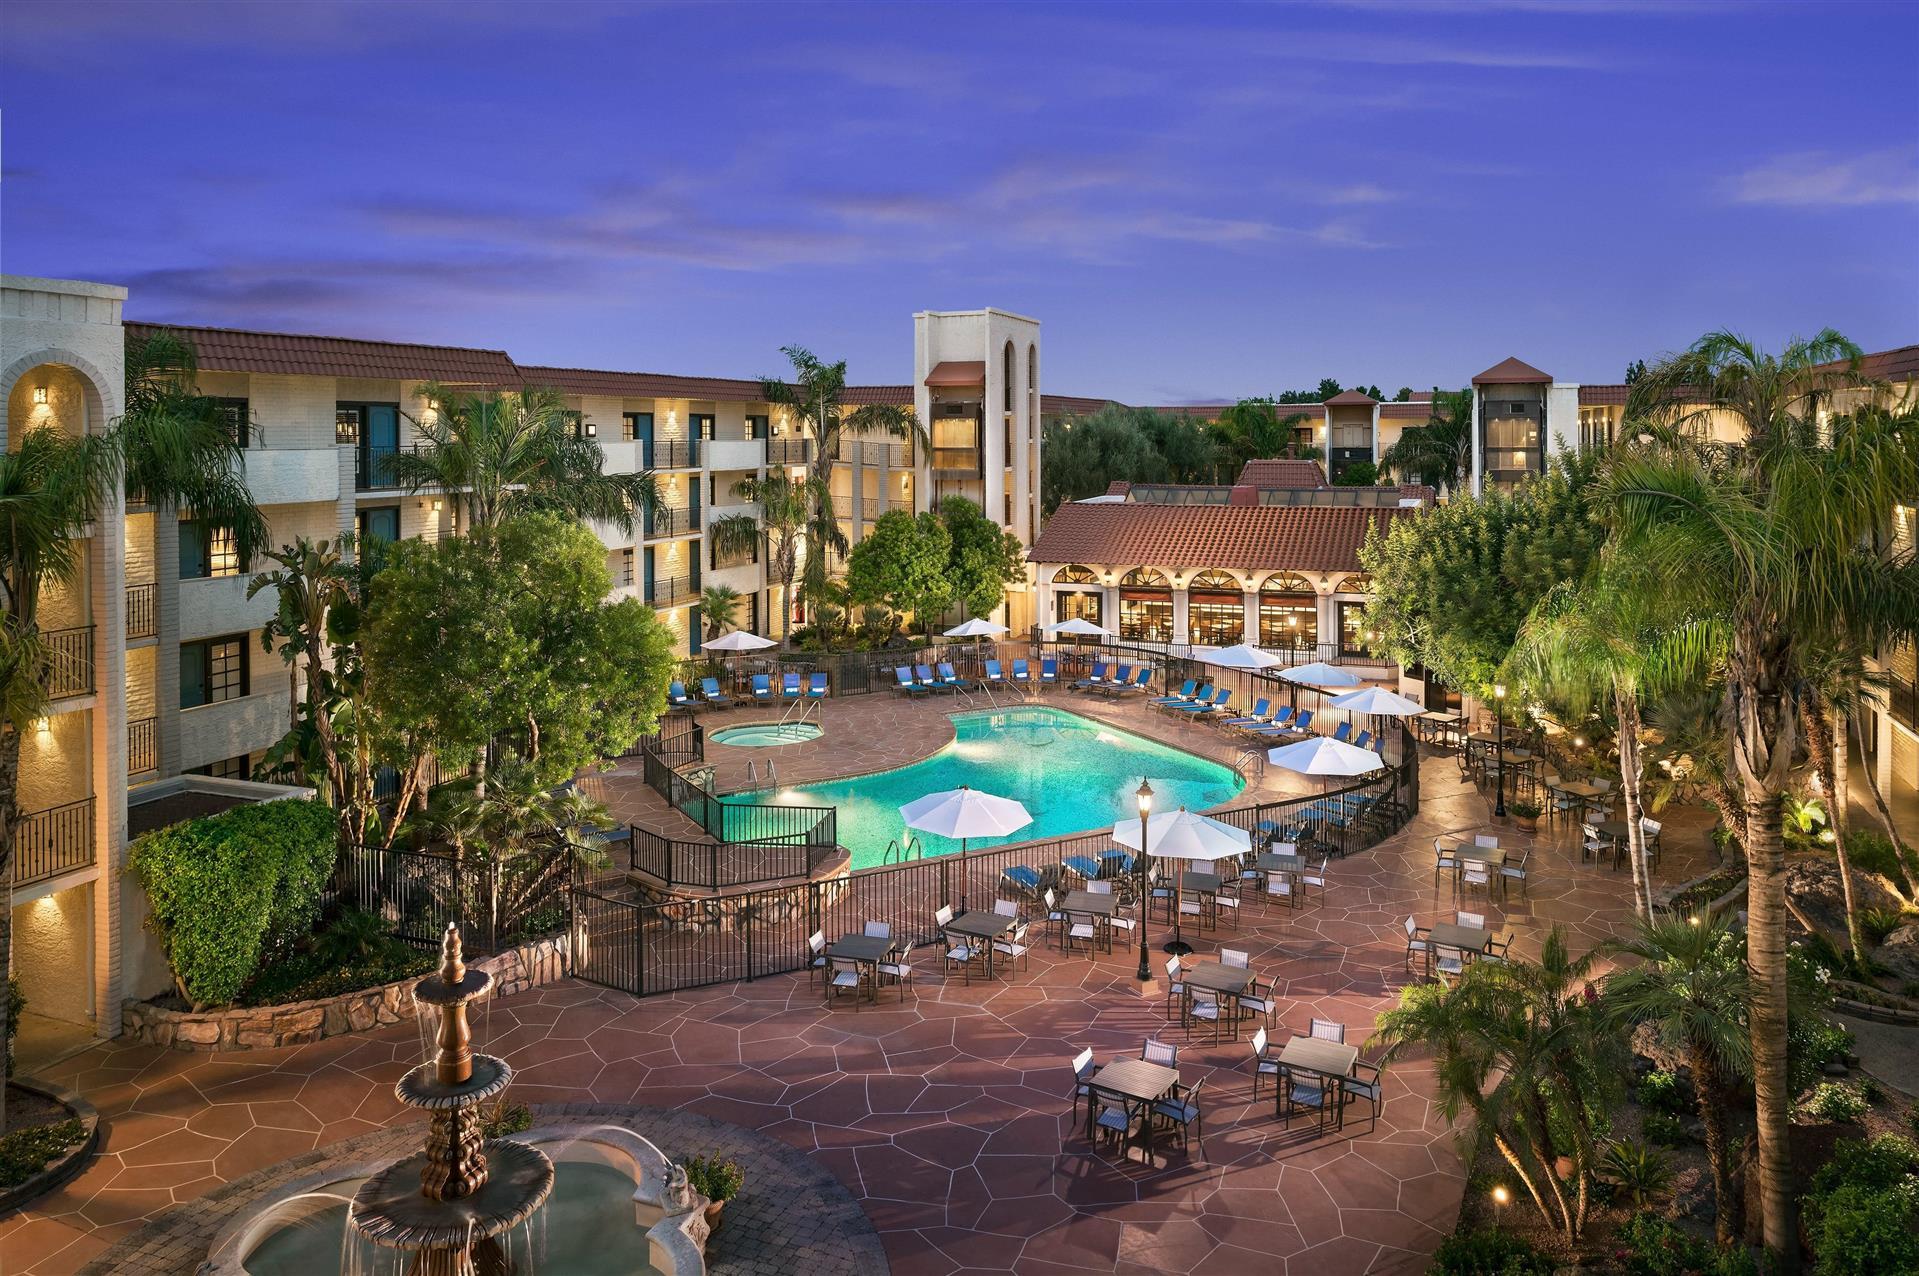 Embassy Suites by Hilton Scottsdale Resort in Scottsdale, AZ